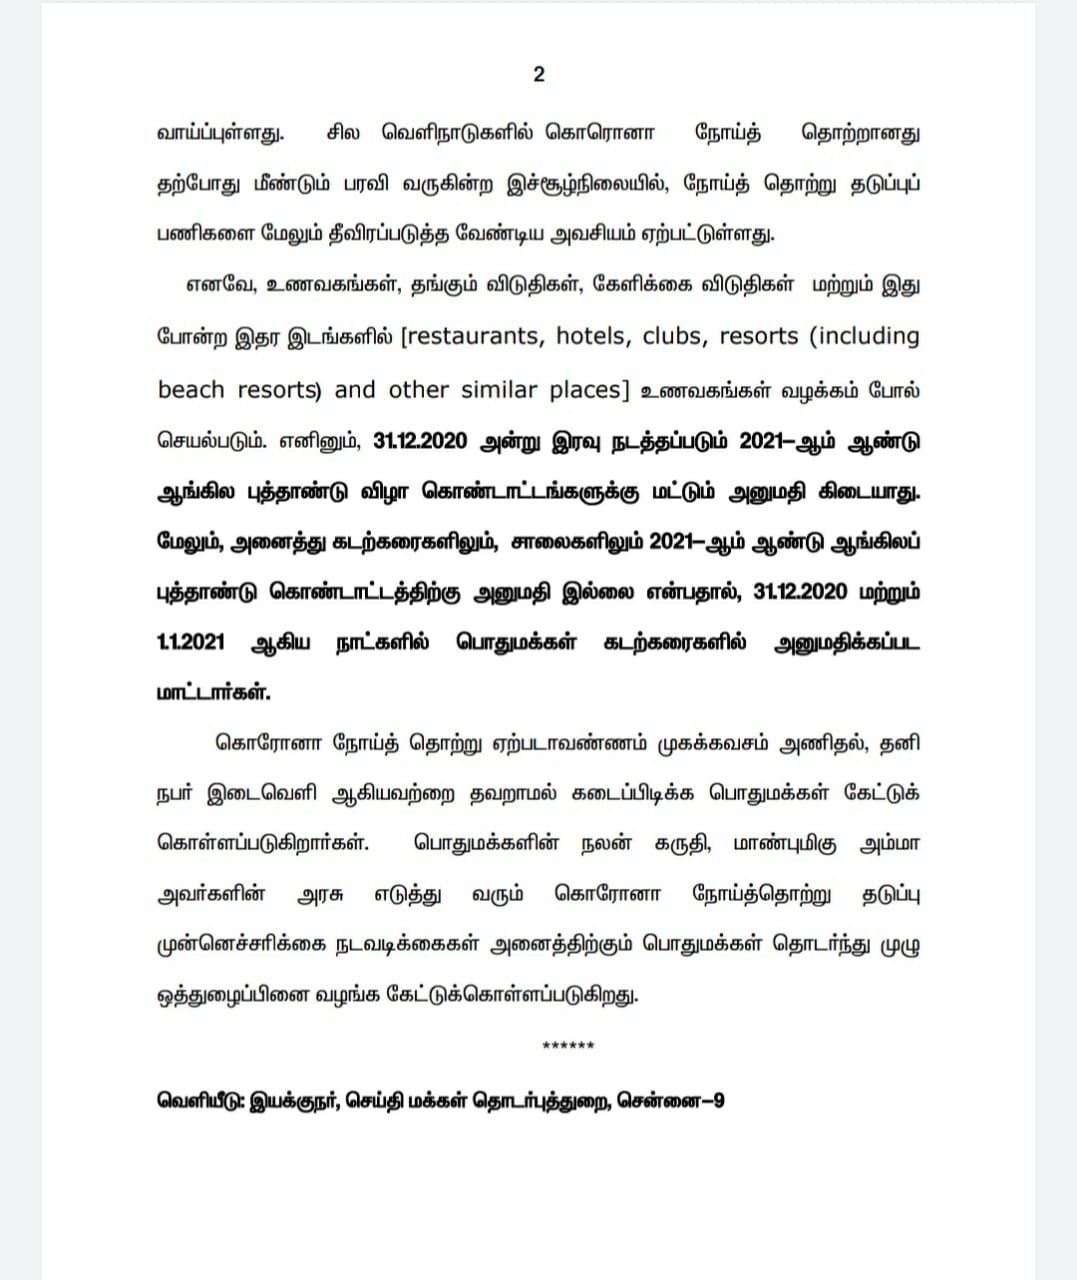 TN GOV: 2021 New year celebration banned in Tamil Nadu